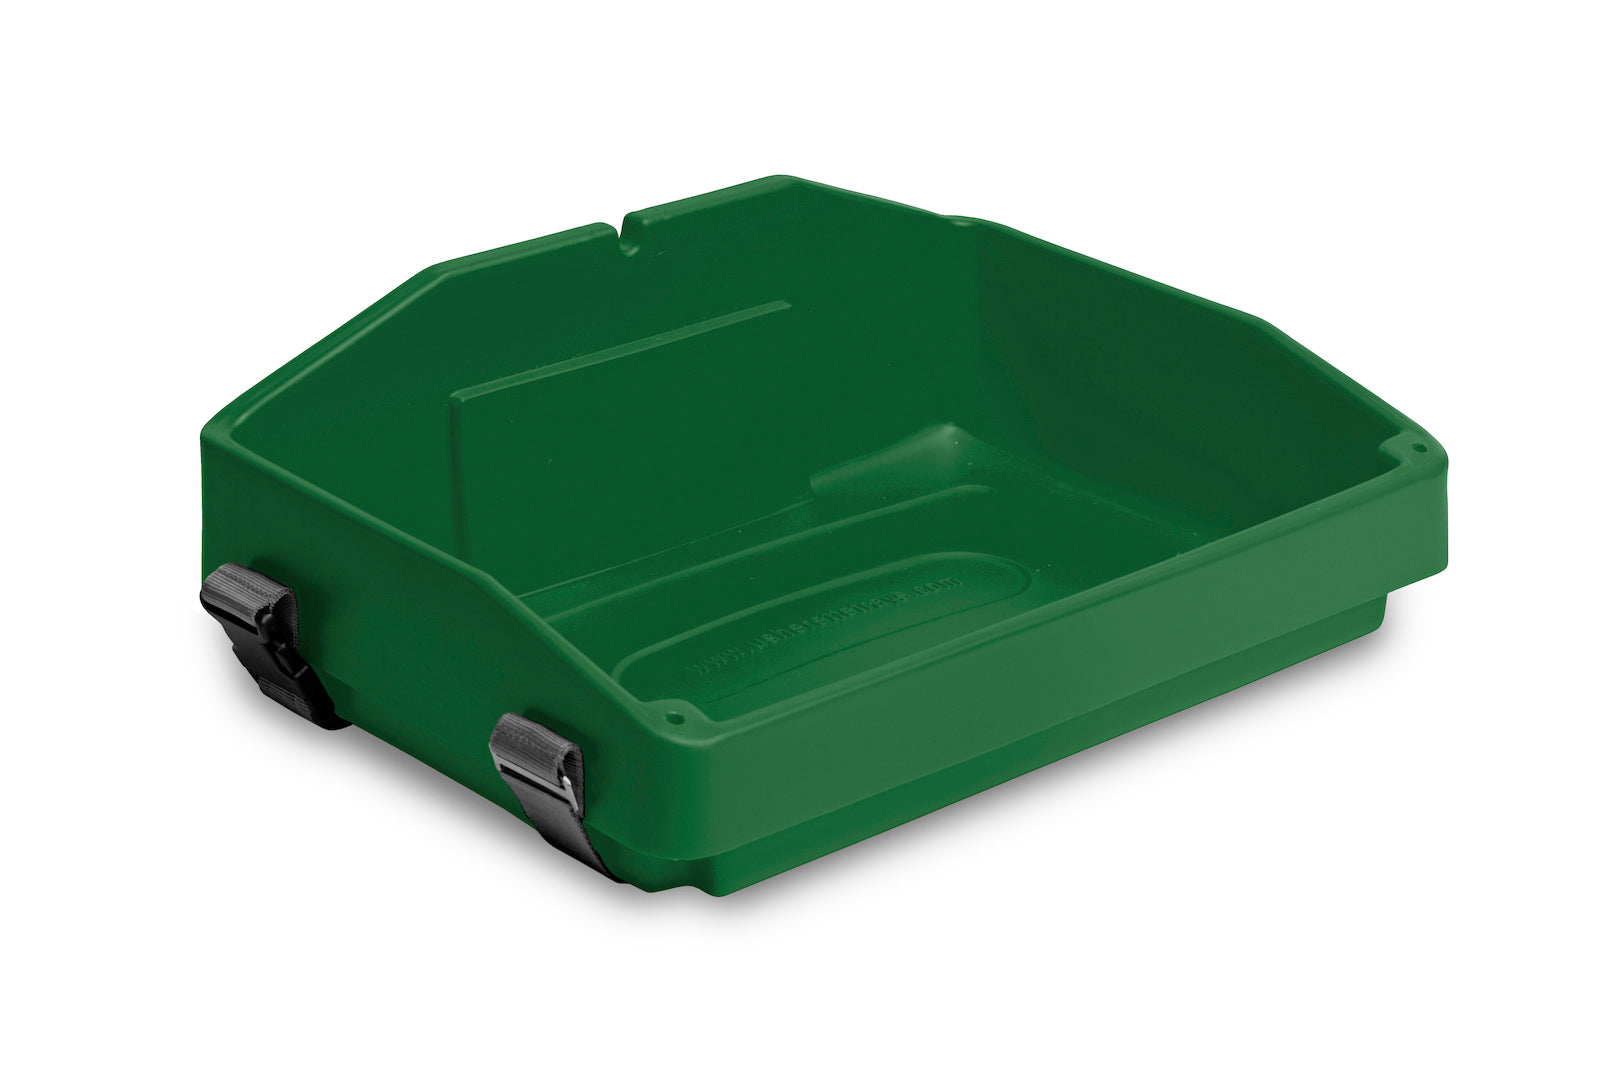 Dark green plastic usherette tray